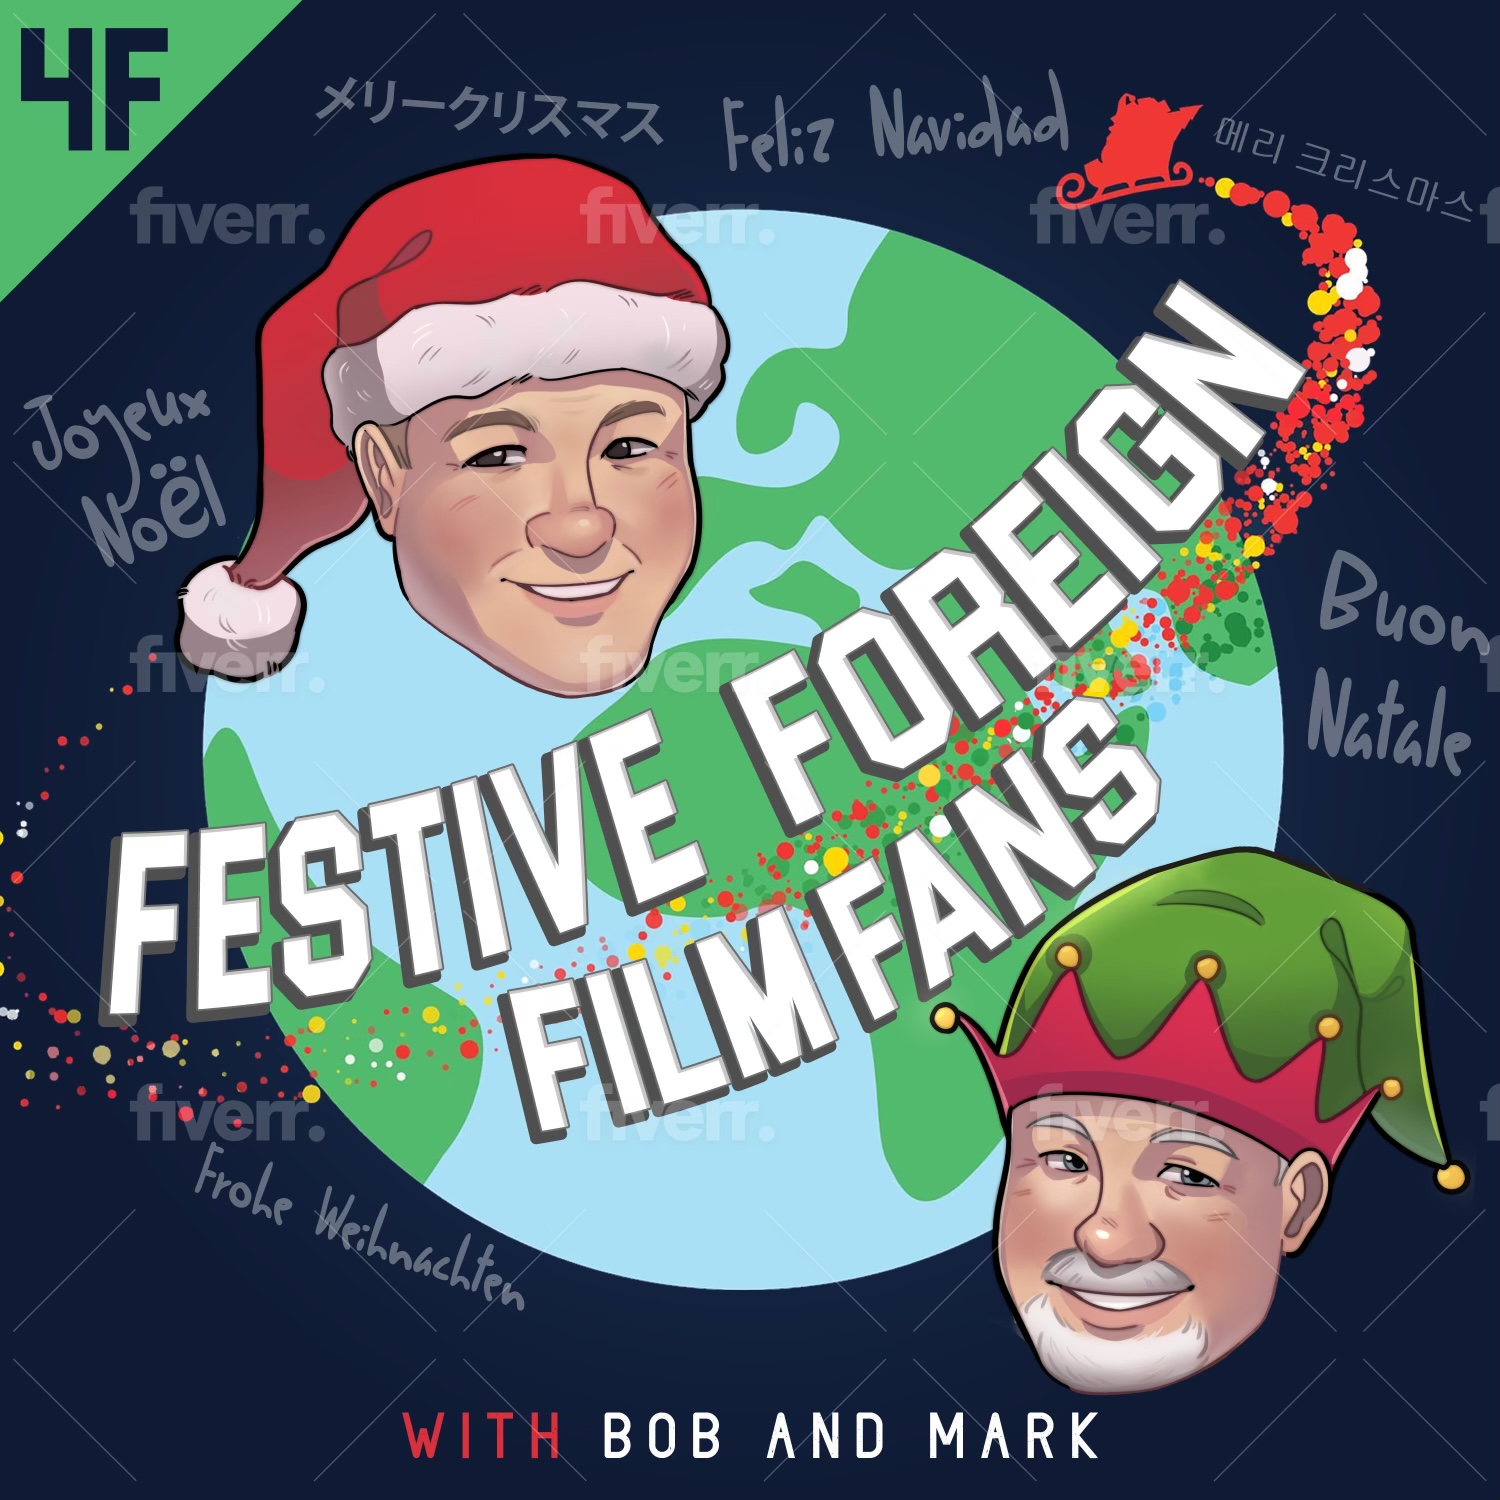 Festive Foreign Film Fans